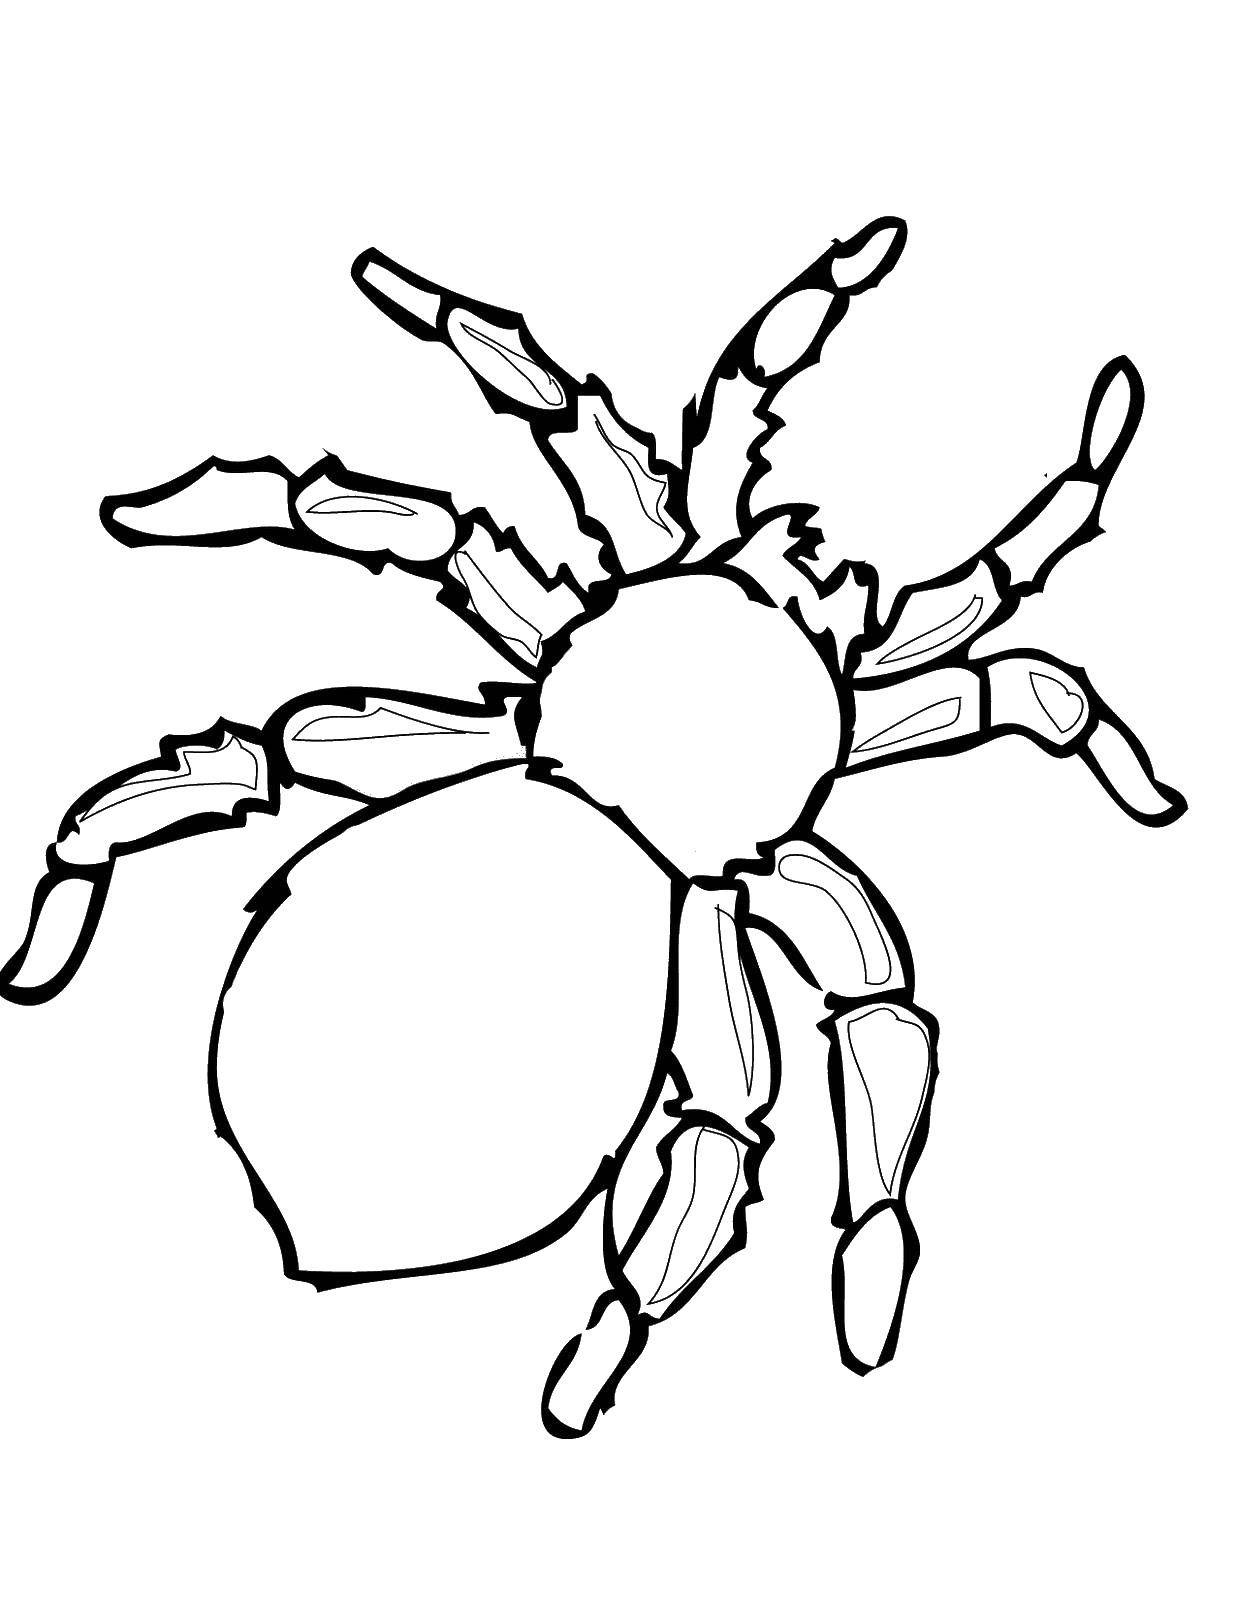 Coloring Tarantula. Category The contour of the spider. Tags:  tarantula, spider.